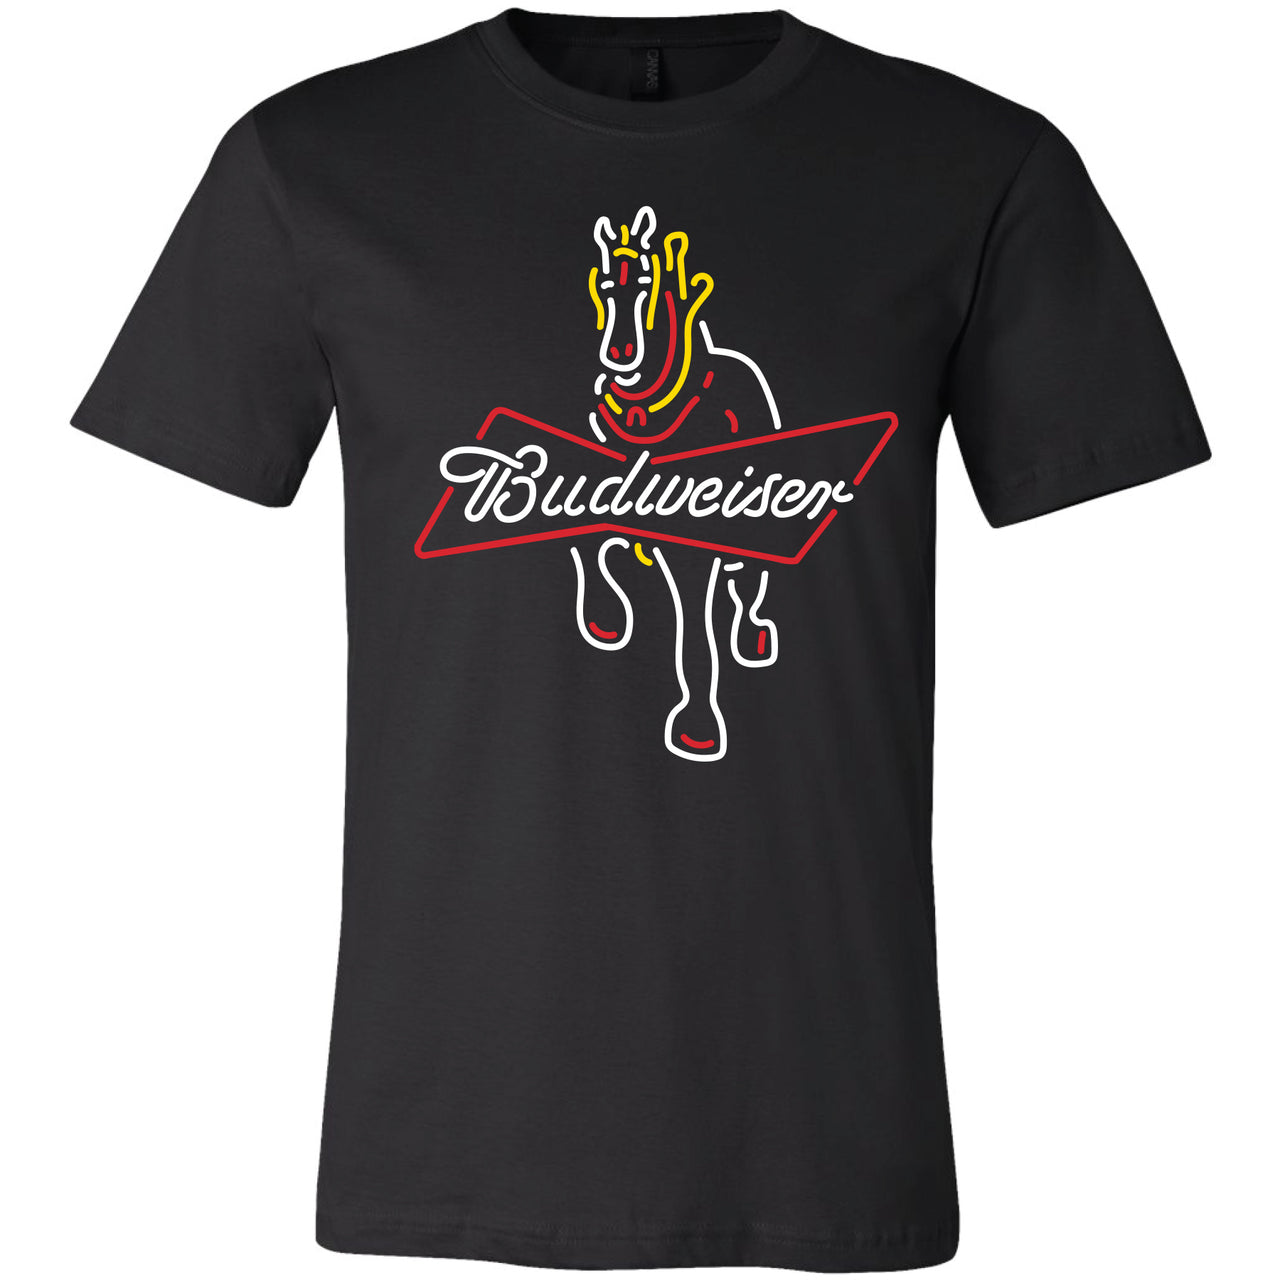 Neon Budweiser Full Clydesdales T-Shirt